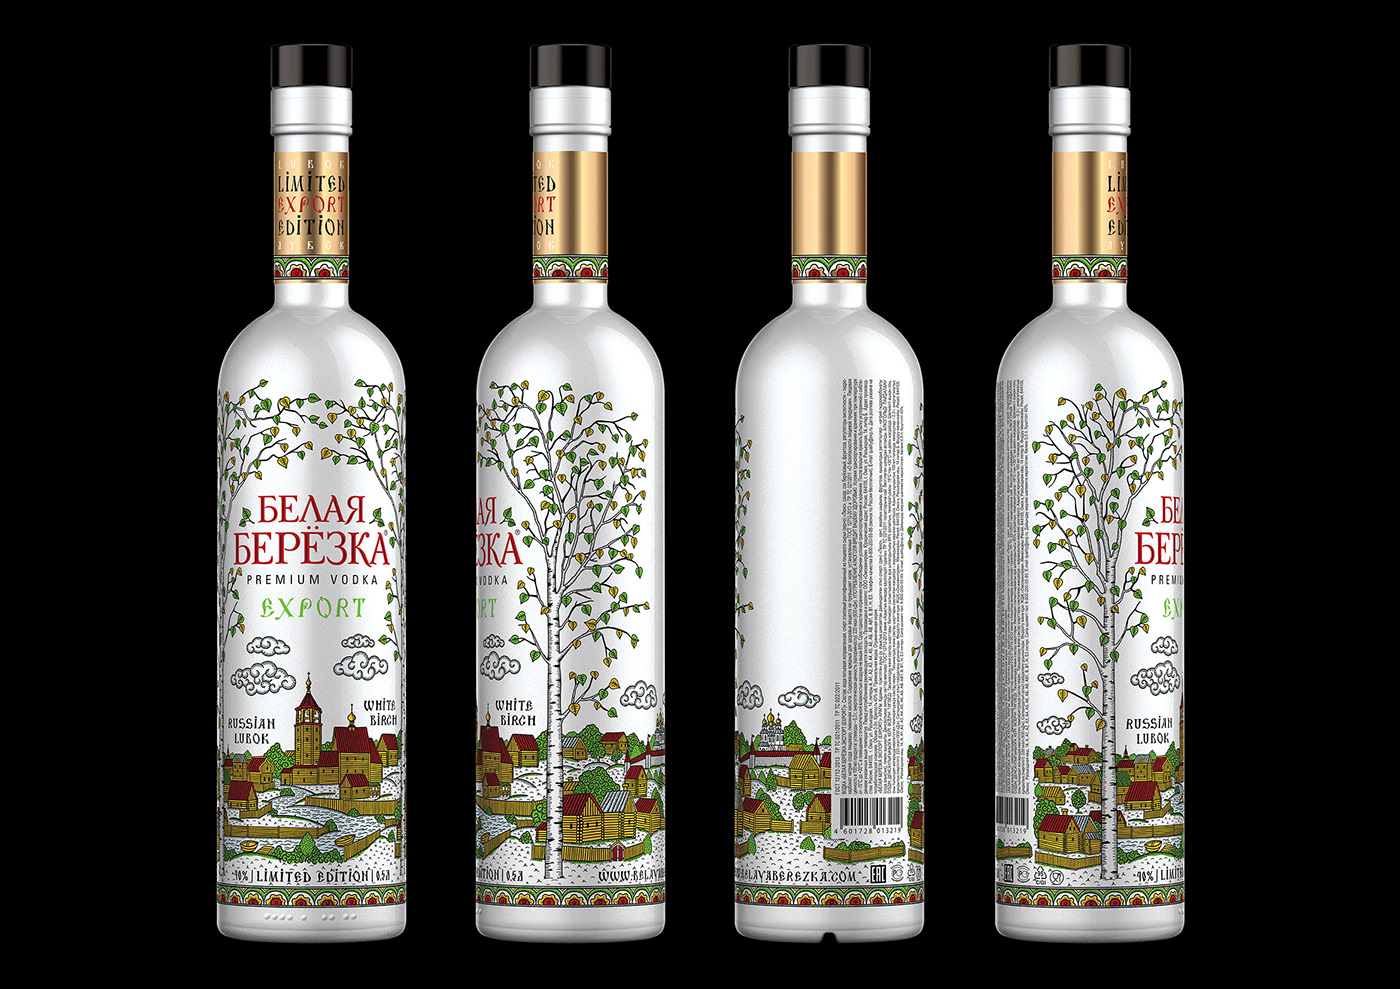 le limited edition Vodka white birch белая березка водка гжель дымковская игрушка лубок палех